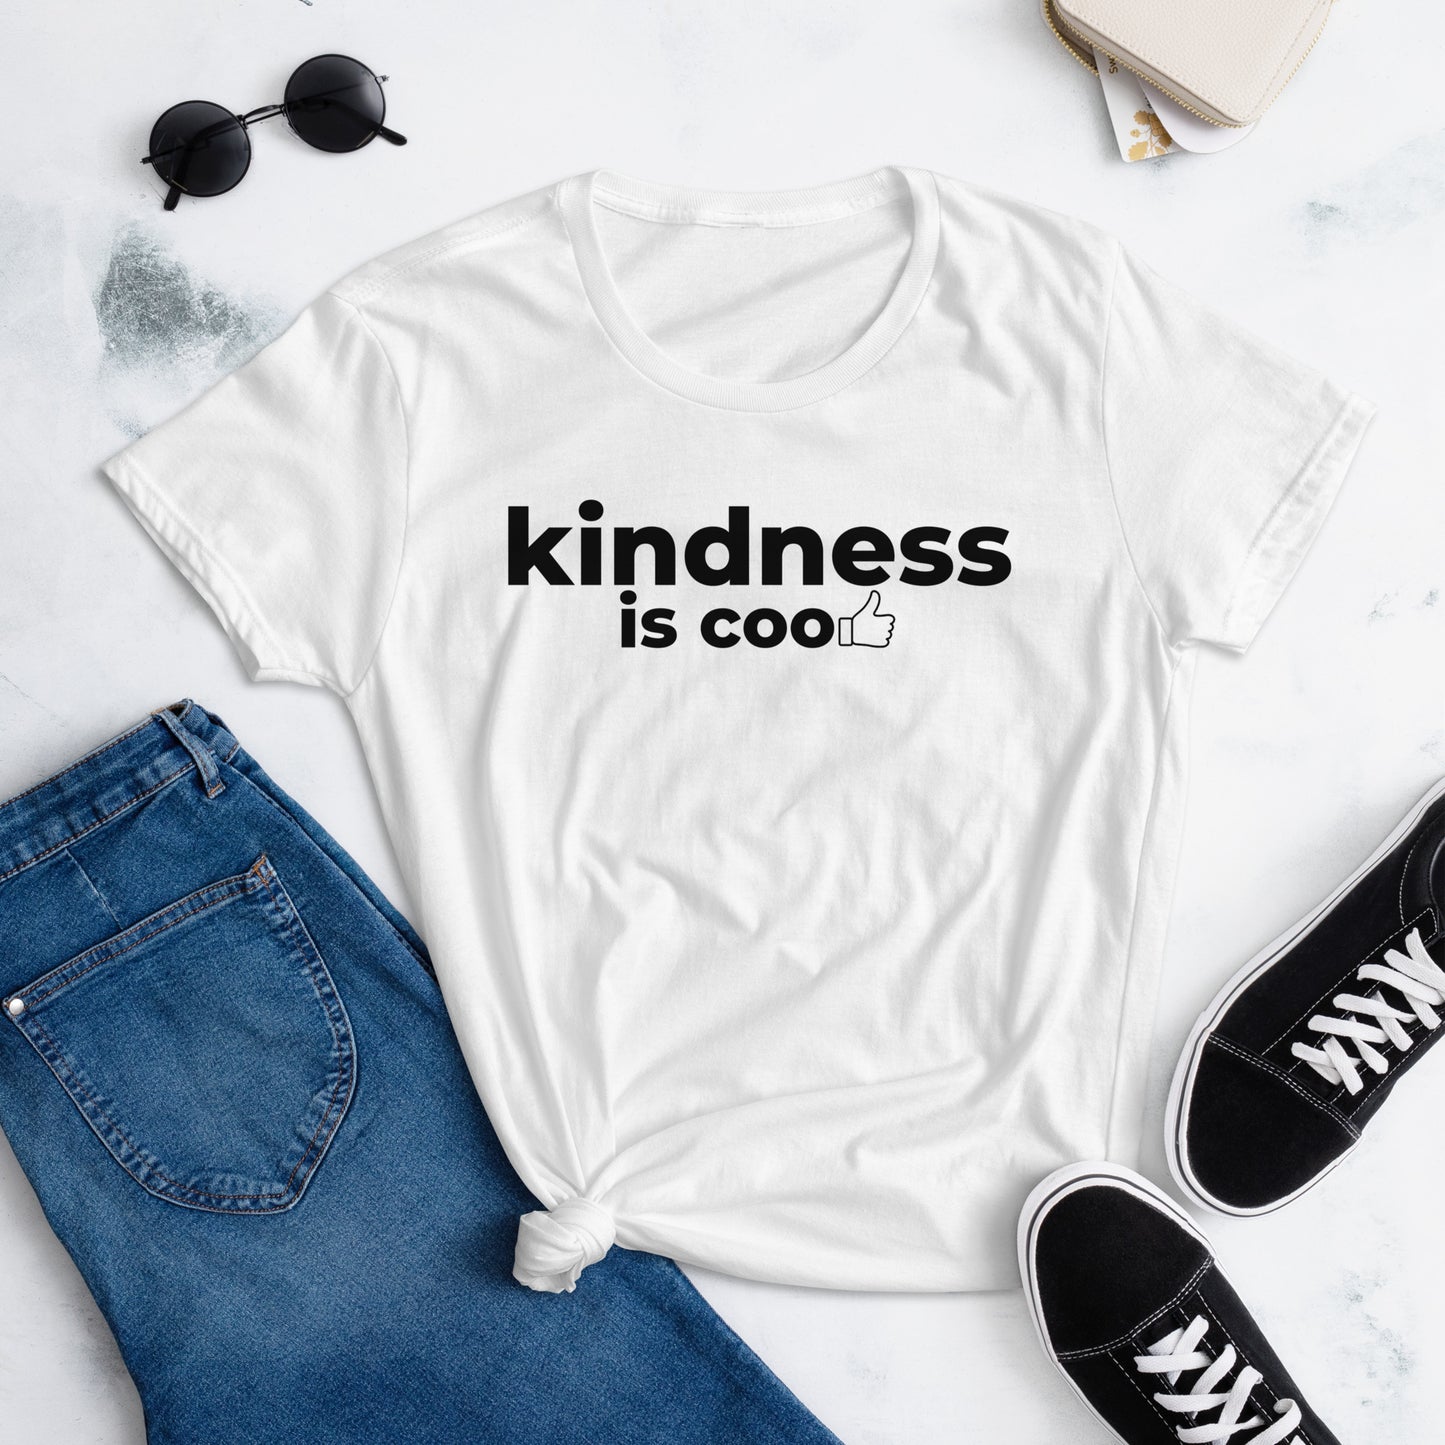 KINDNESS IS COOL - Women's short sleeve t-shirt